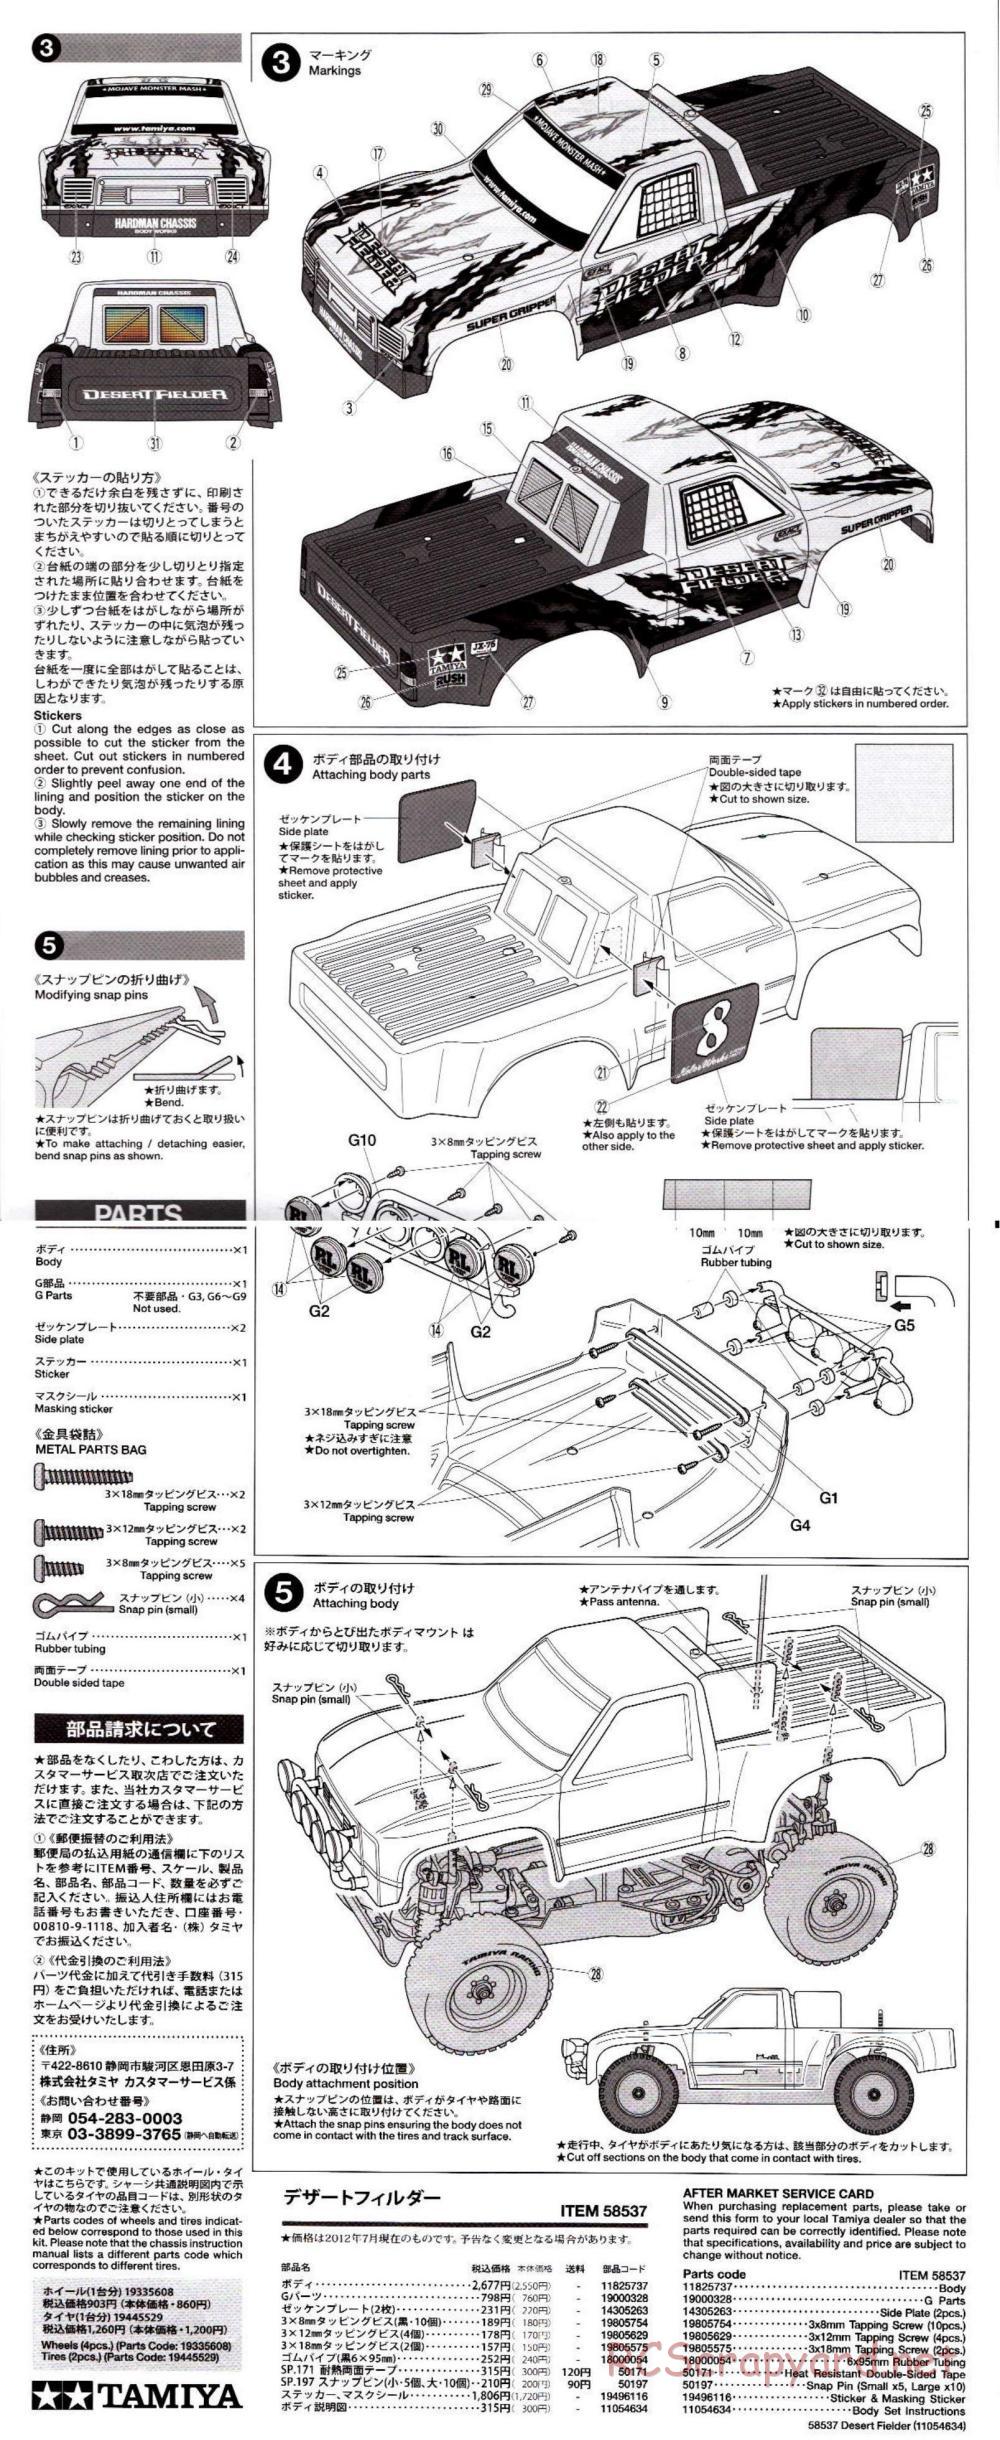 Tamiya - Desert Fielder - TA-02T Chassis - Body Manual - Page 2